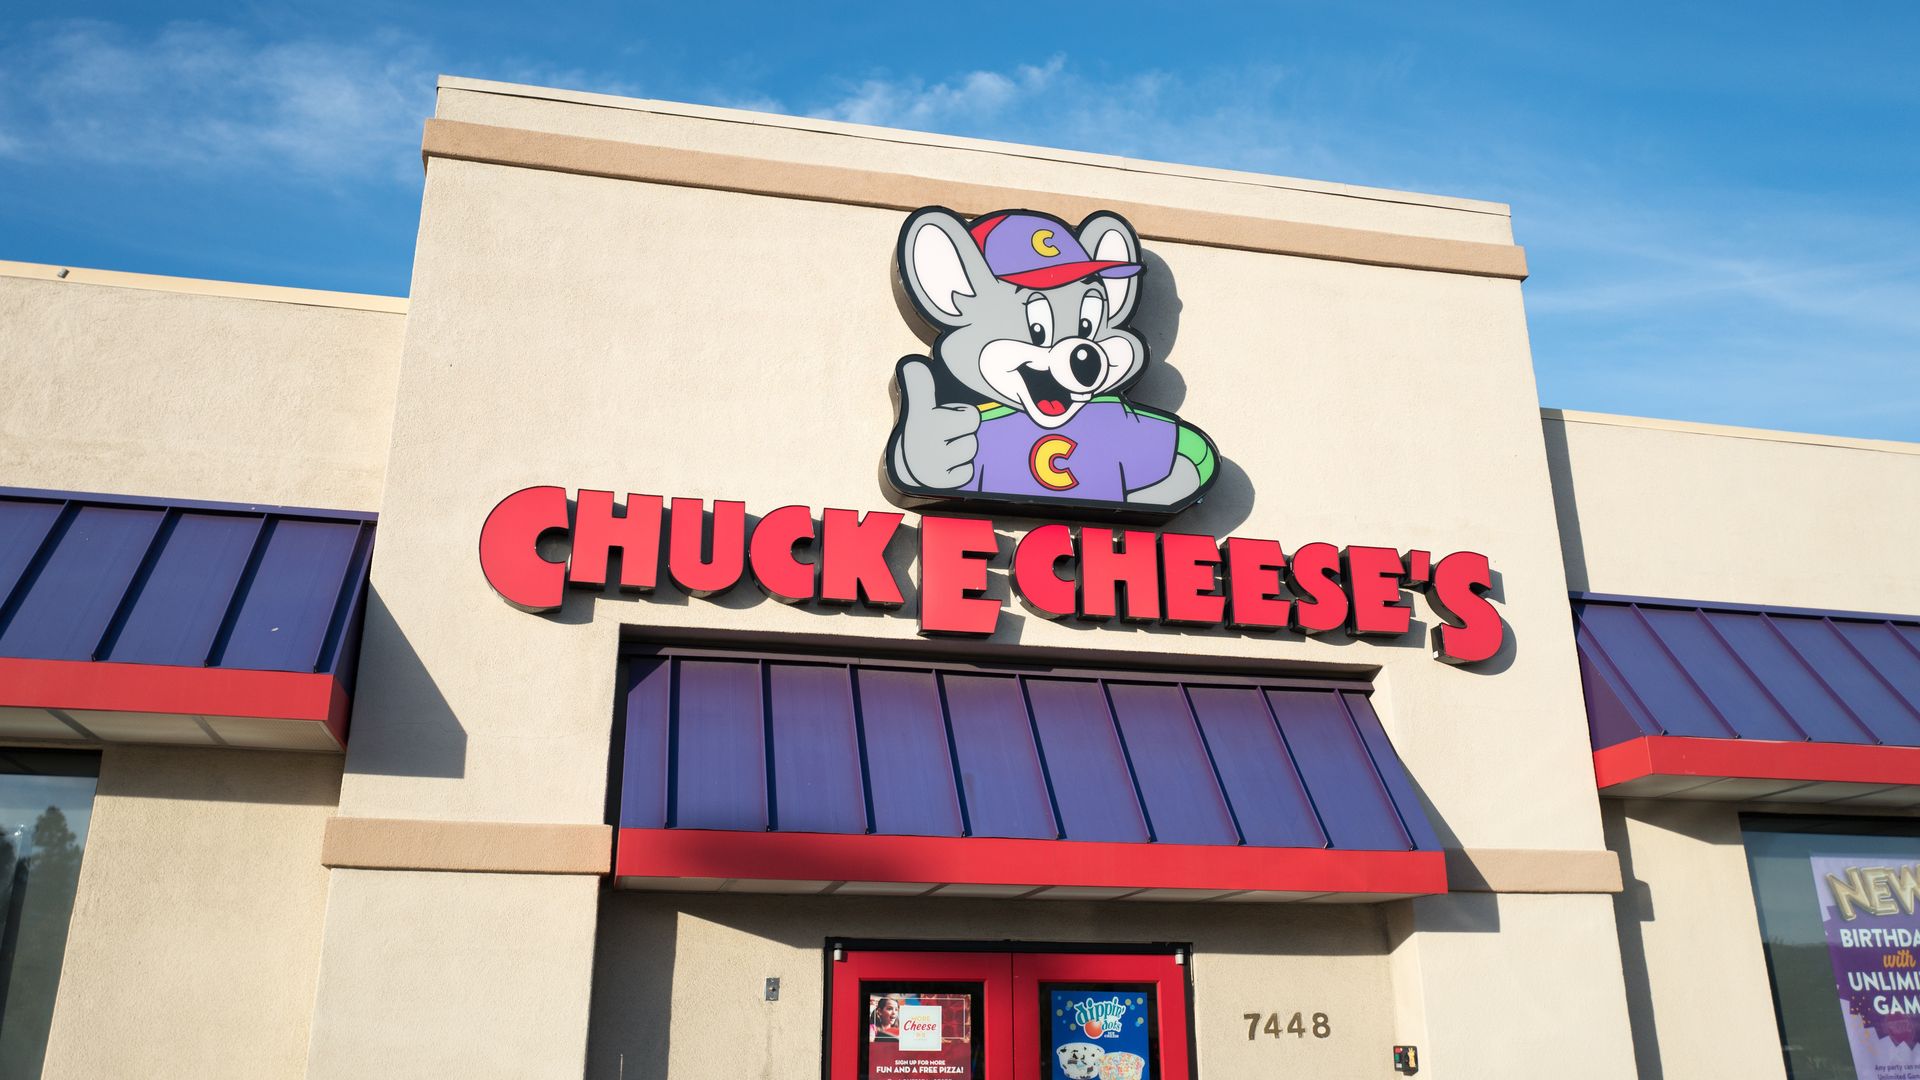 Chuck e cheese storefront.